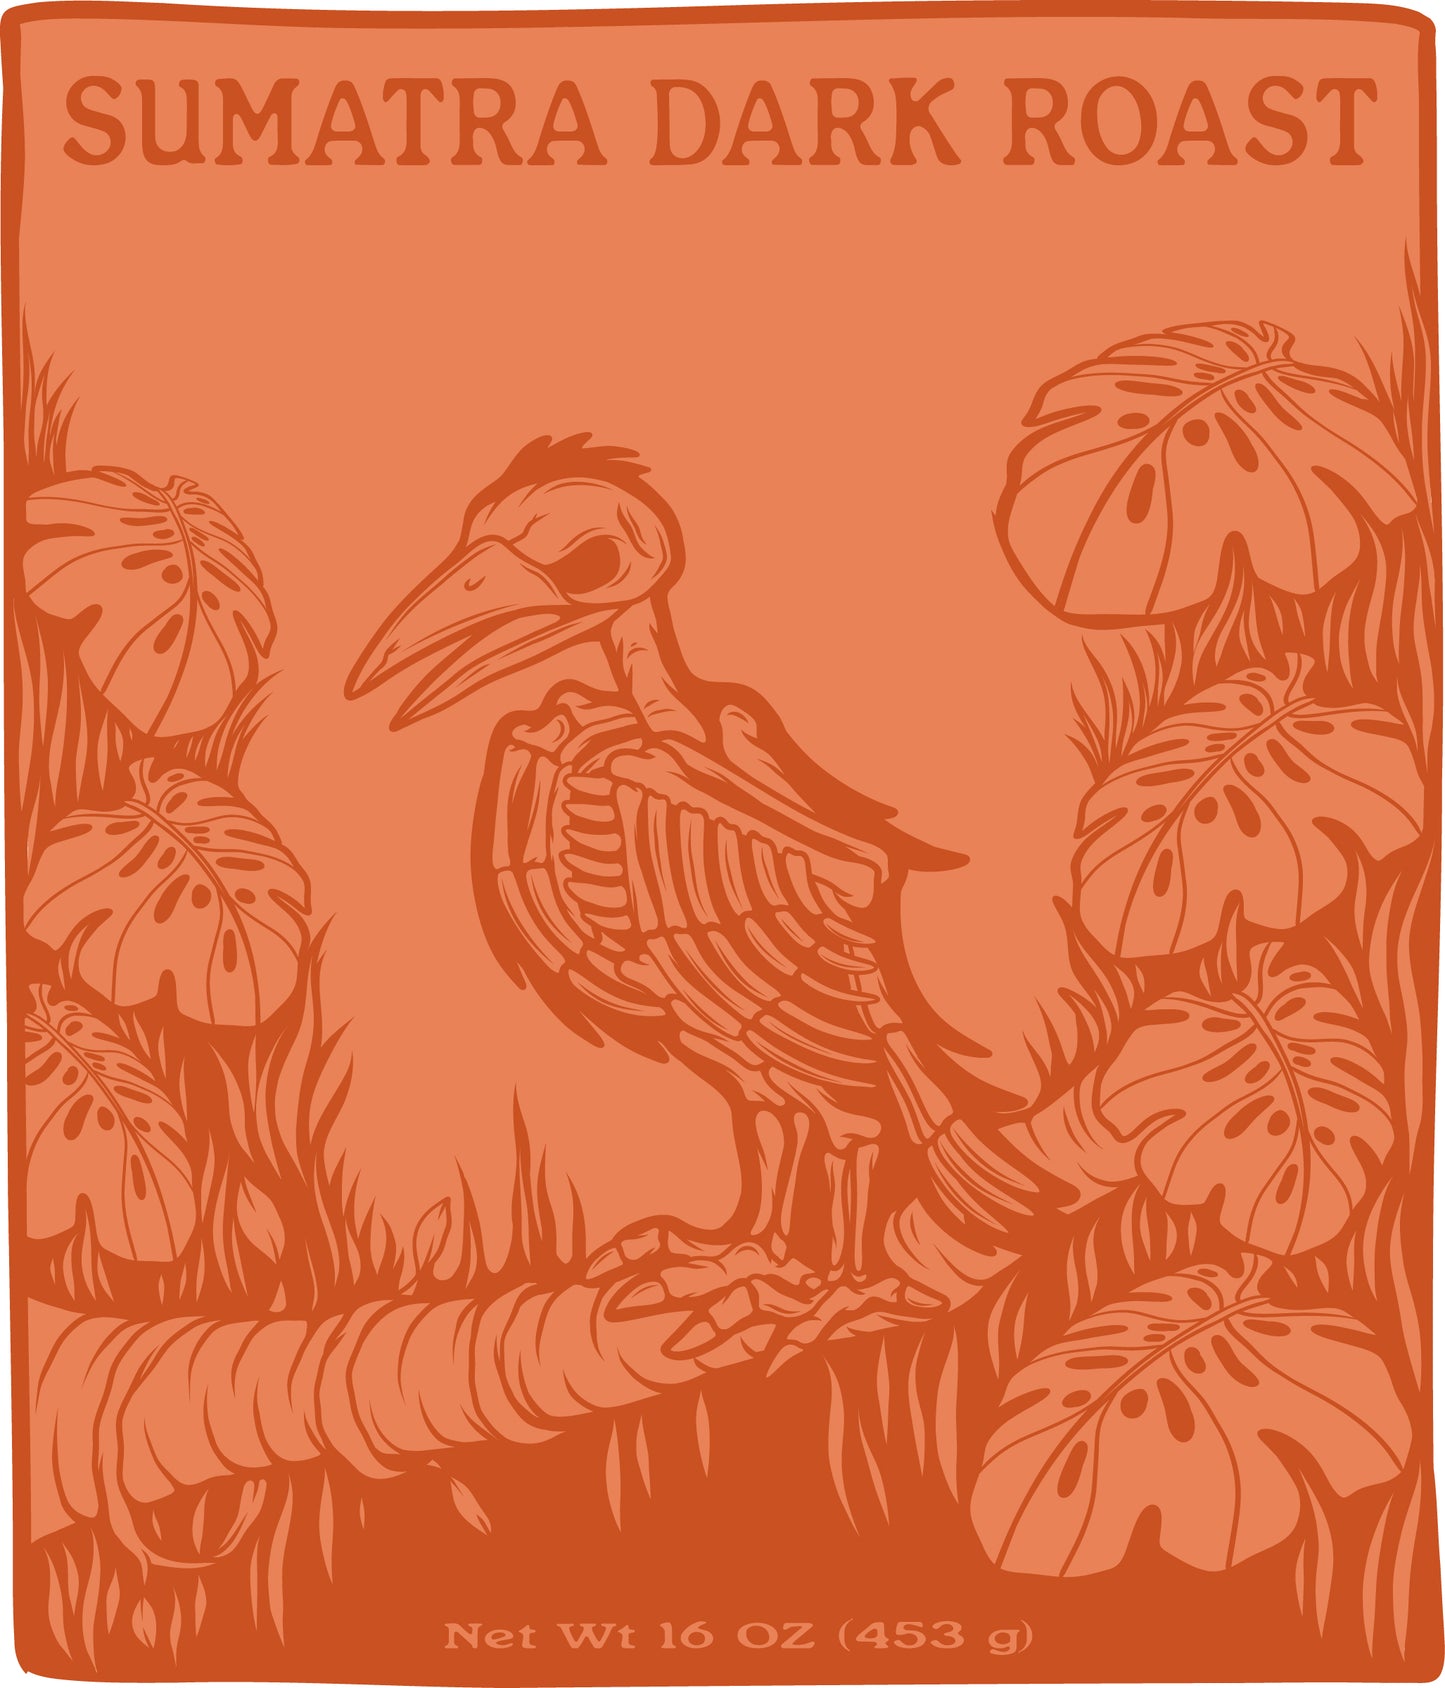 Sumatra Dark Roast